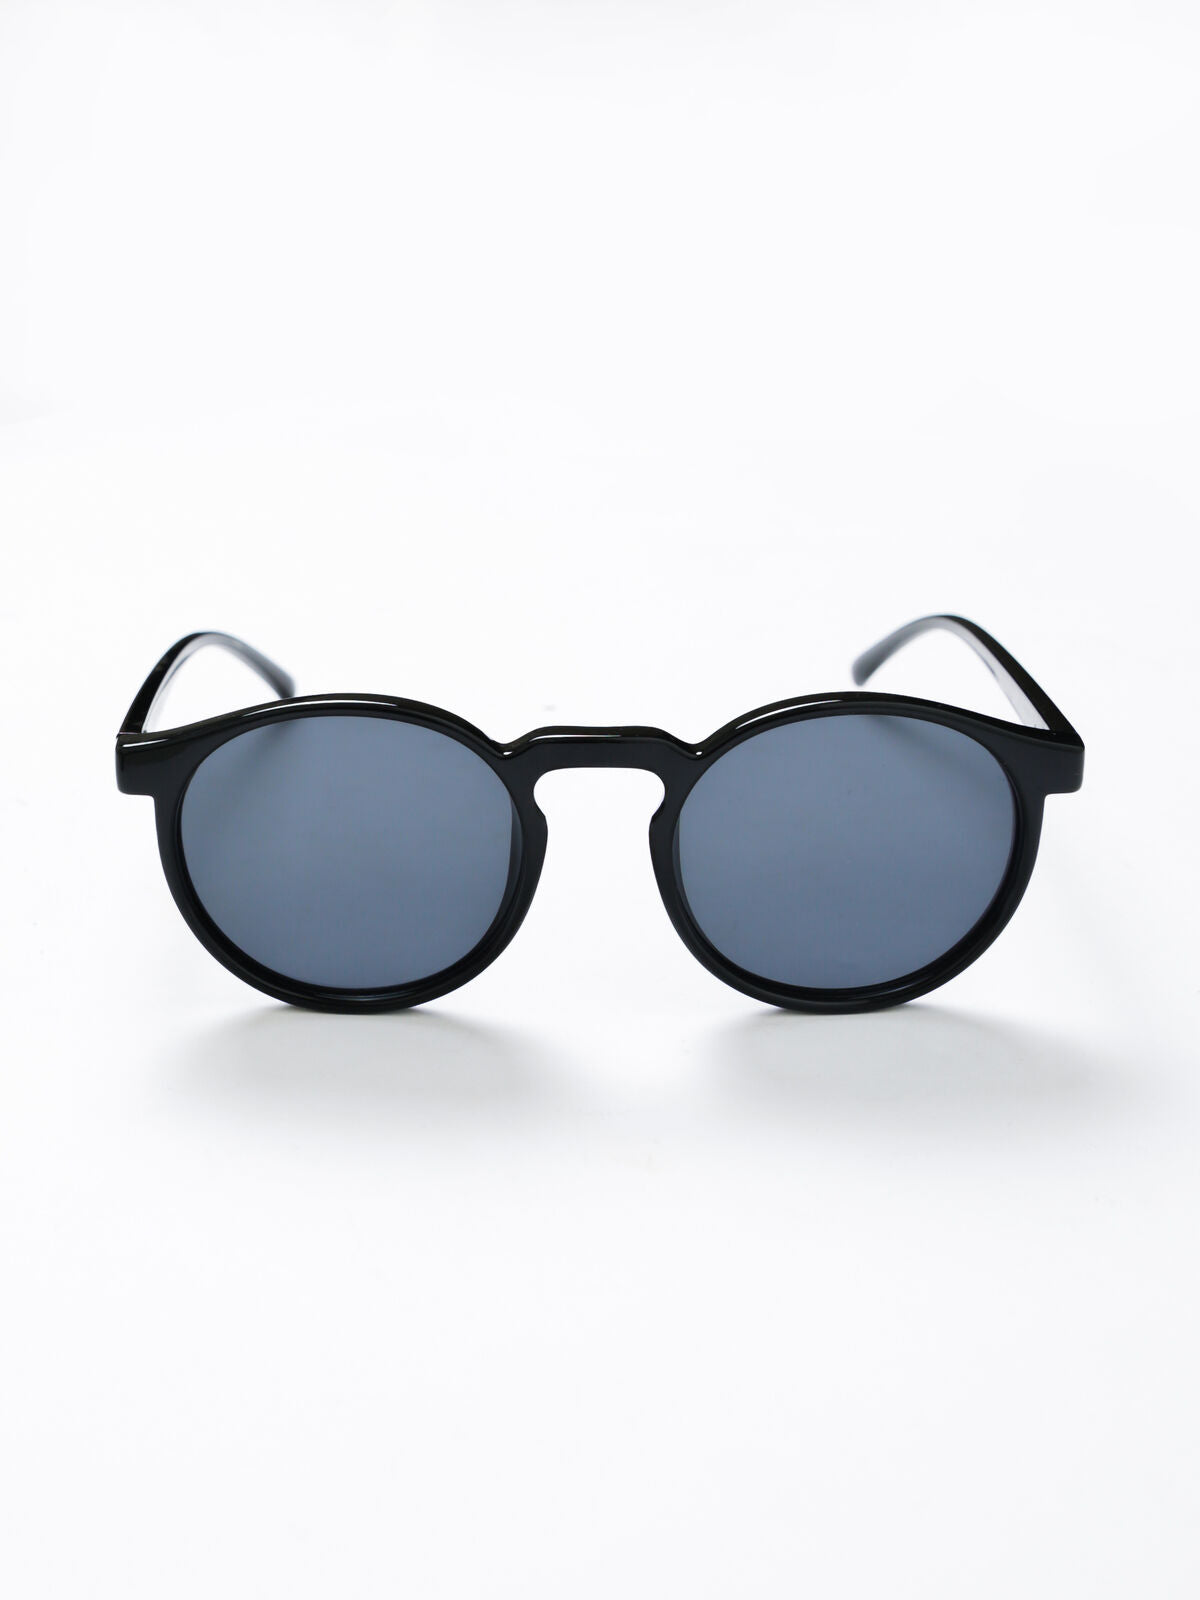 Teen Spirit Deux Sunglasses in Black with Black Lens